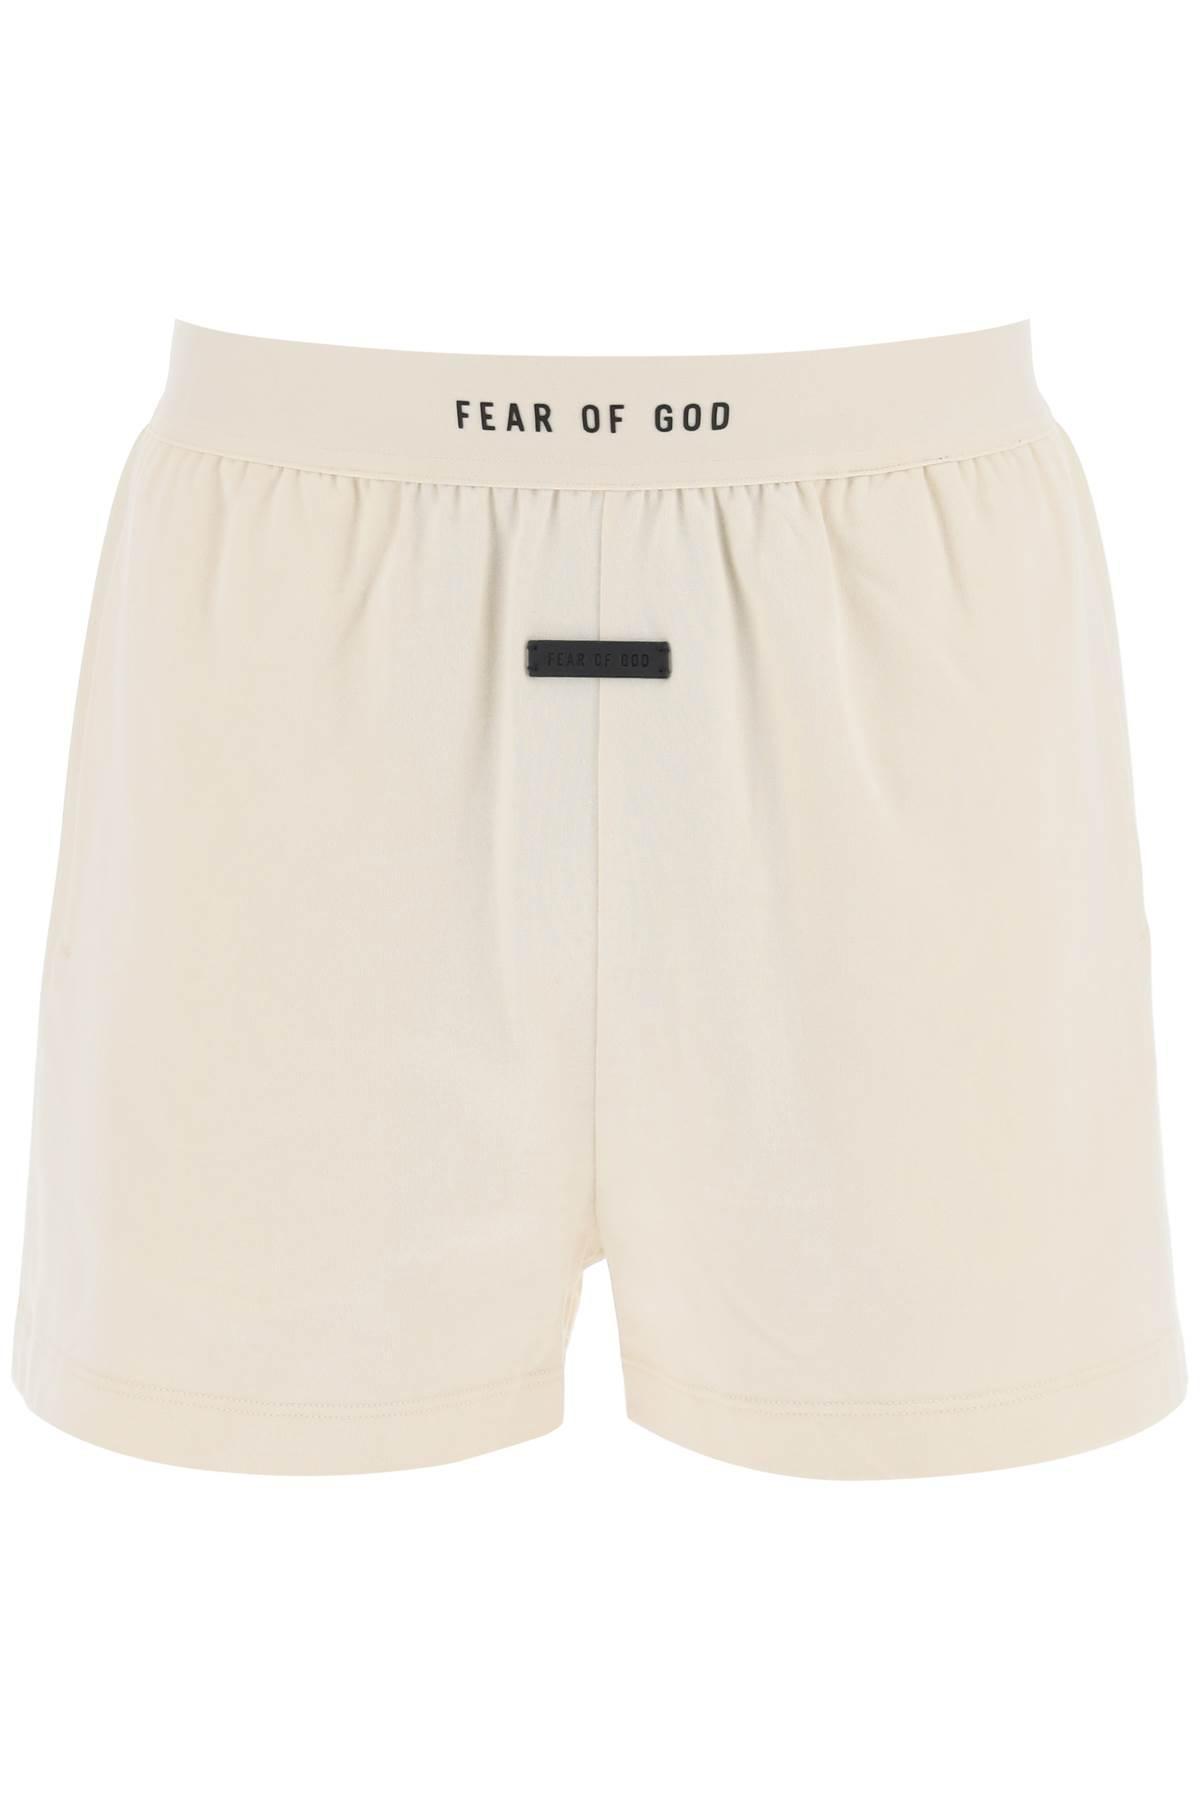 Fear Of God The Lounge Boxer Short in White for Men